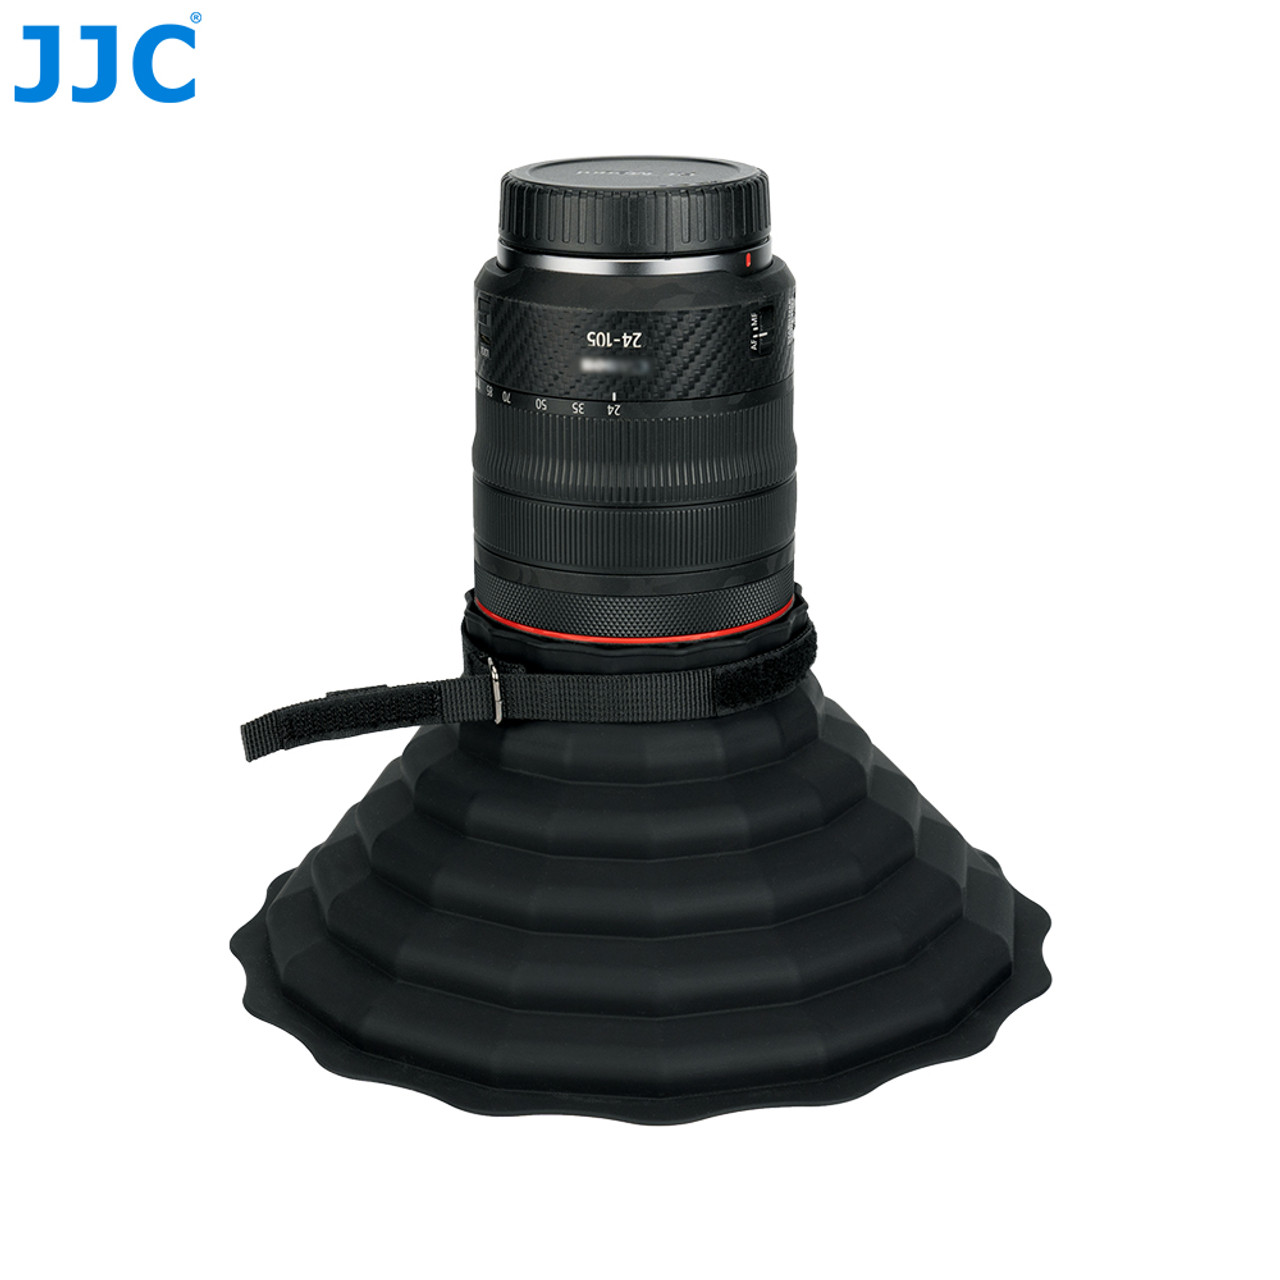 JJC LH-ARLII Silicone Lens Hood for Lens diameter between 73mm~88mm